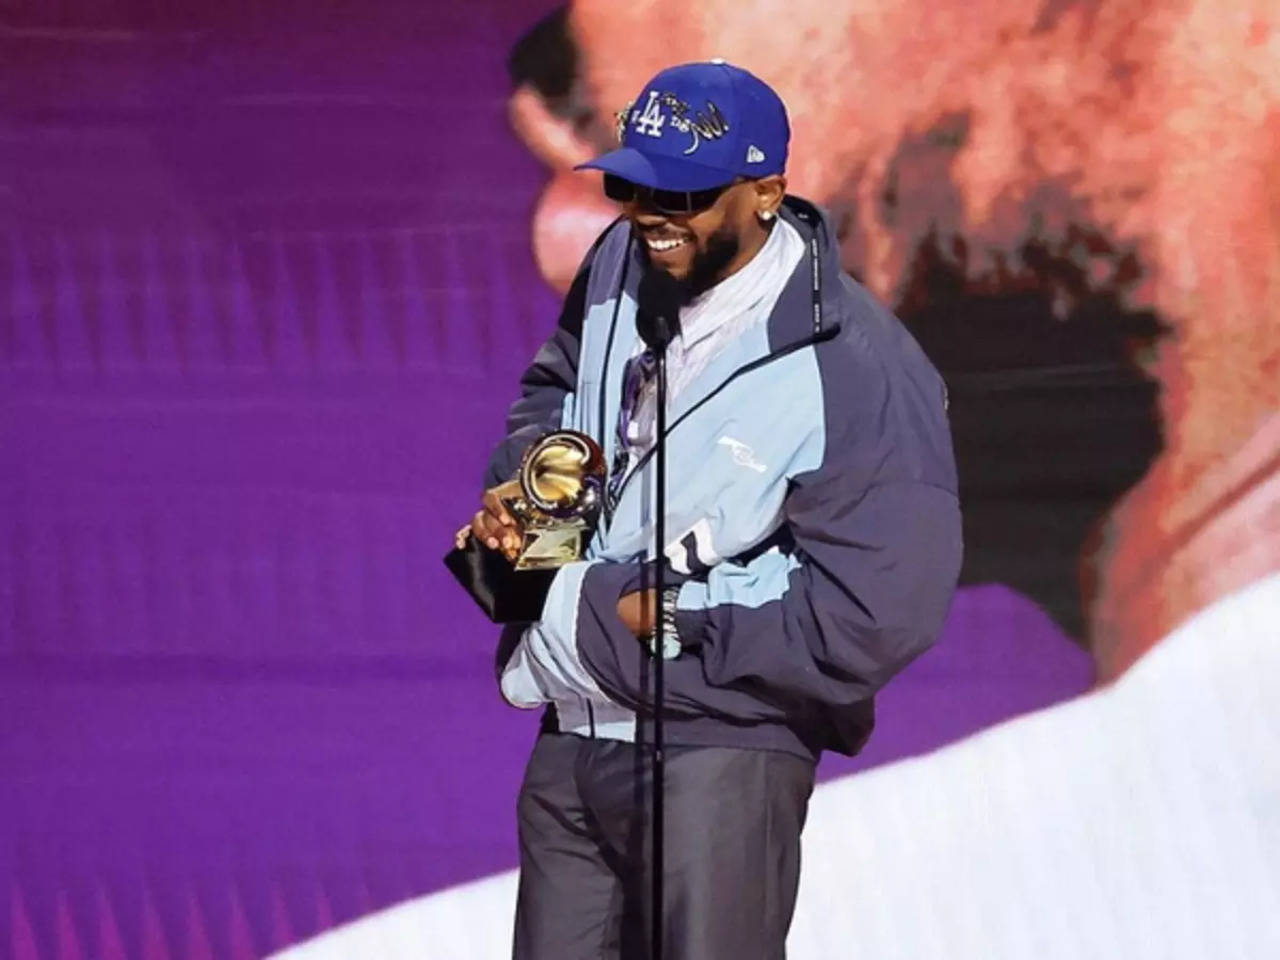 KENDRICK LAMAR Wins Best Rap Album For 'MR. MORALE & THE BIG